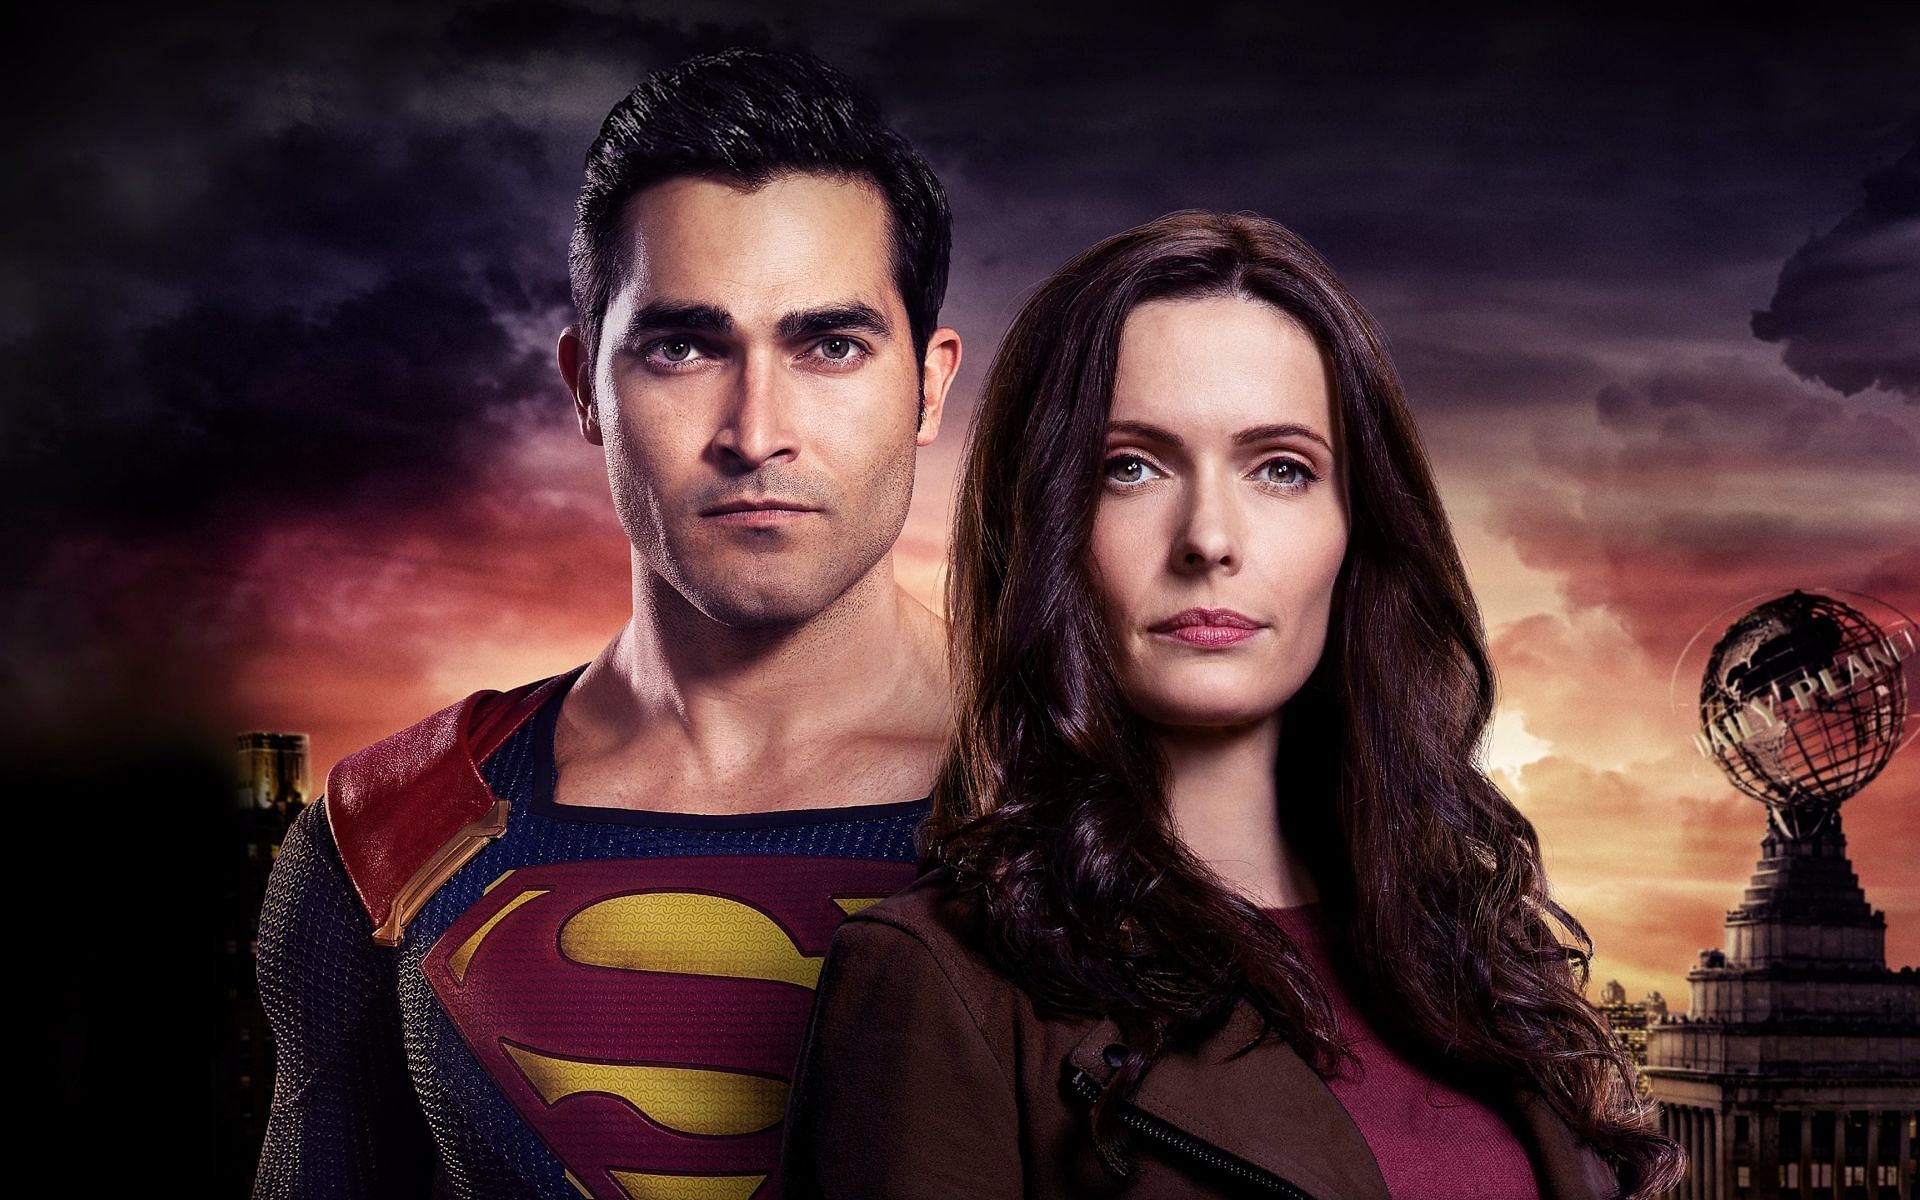 Superman and lois season 2